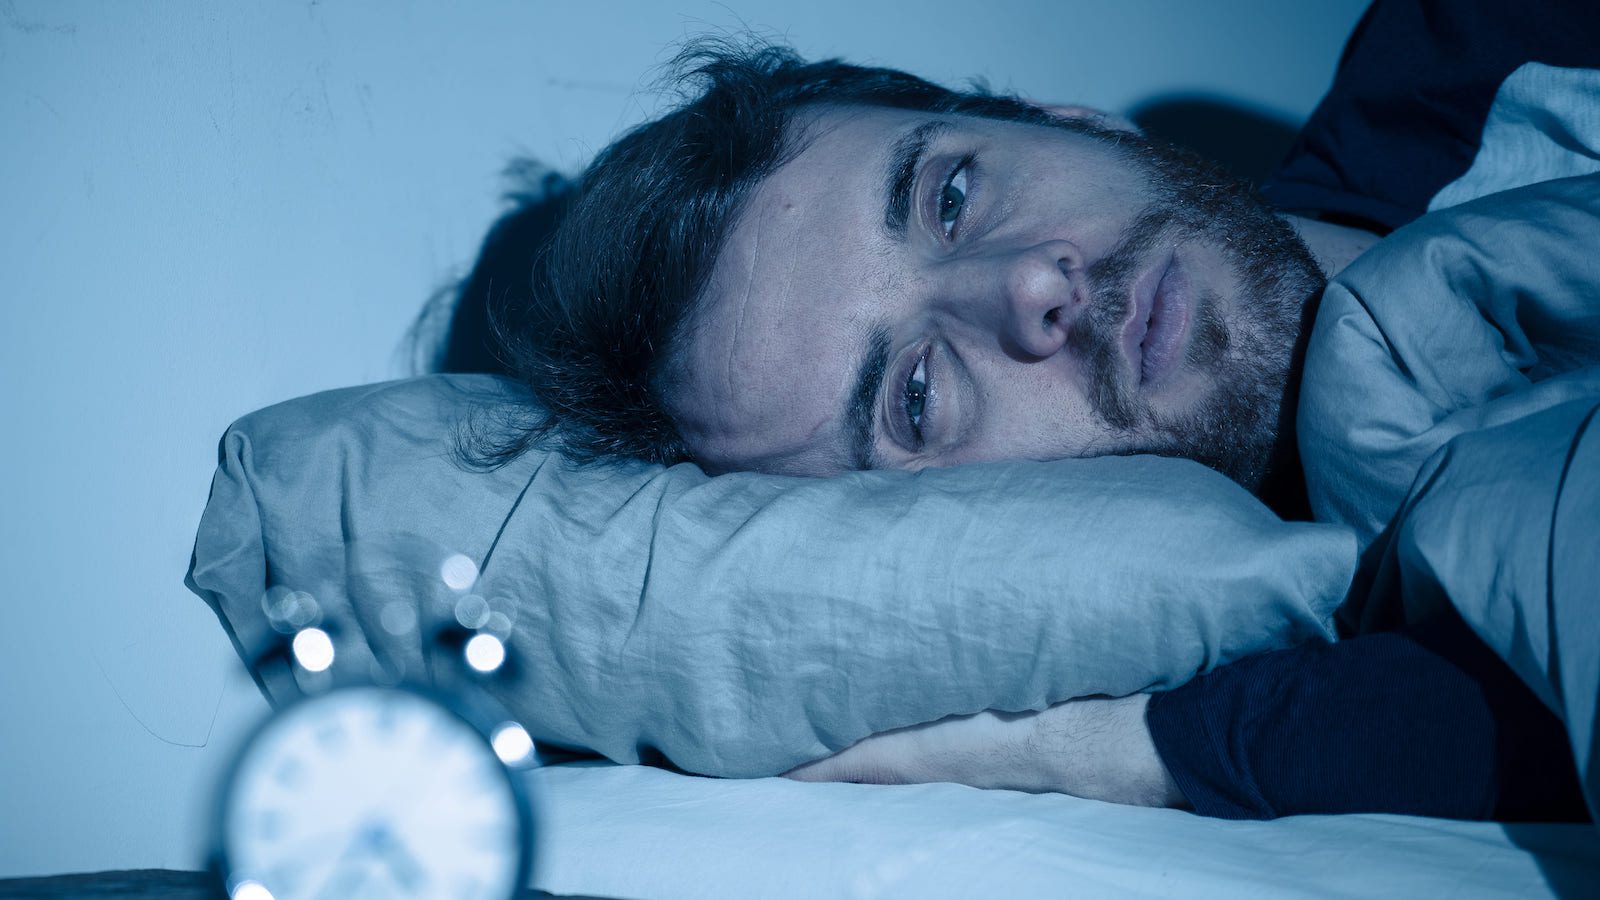 Study: Under 5 Hours of Sleep Harms Health